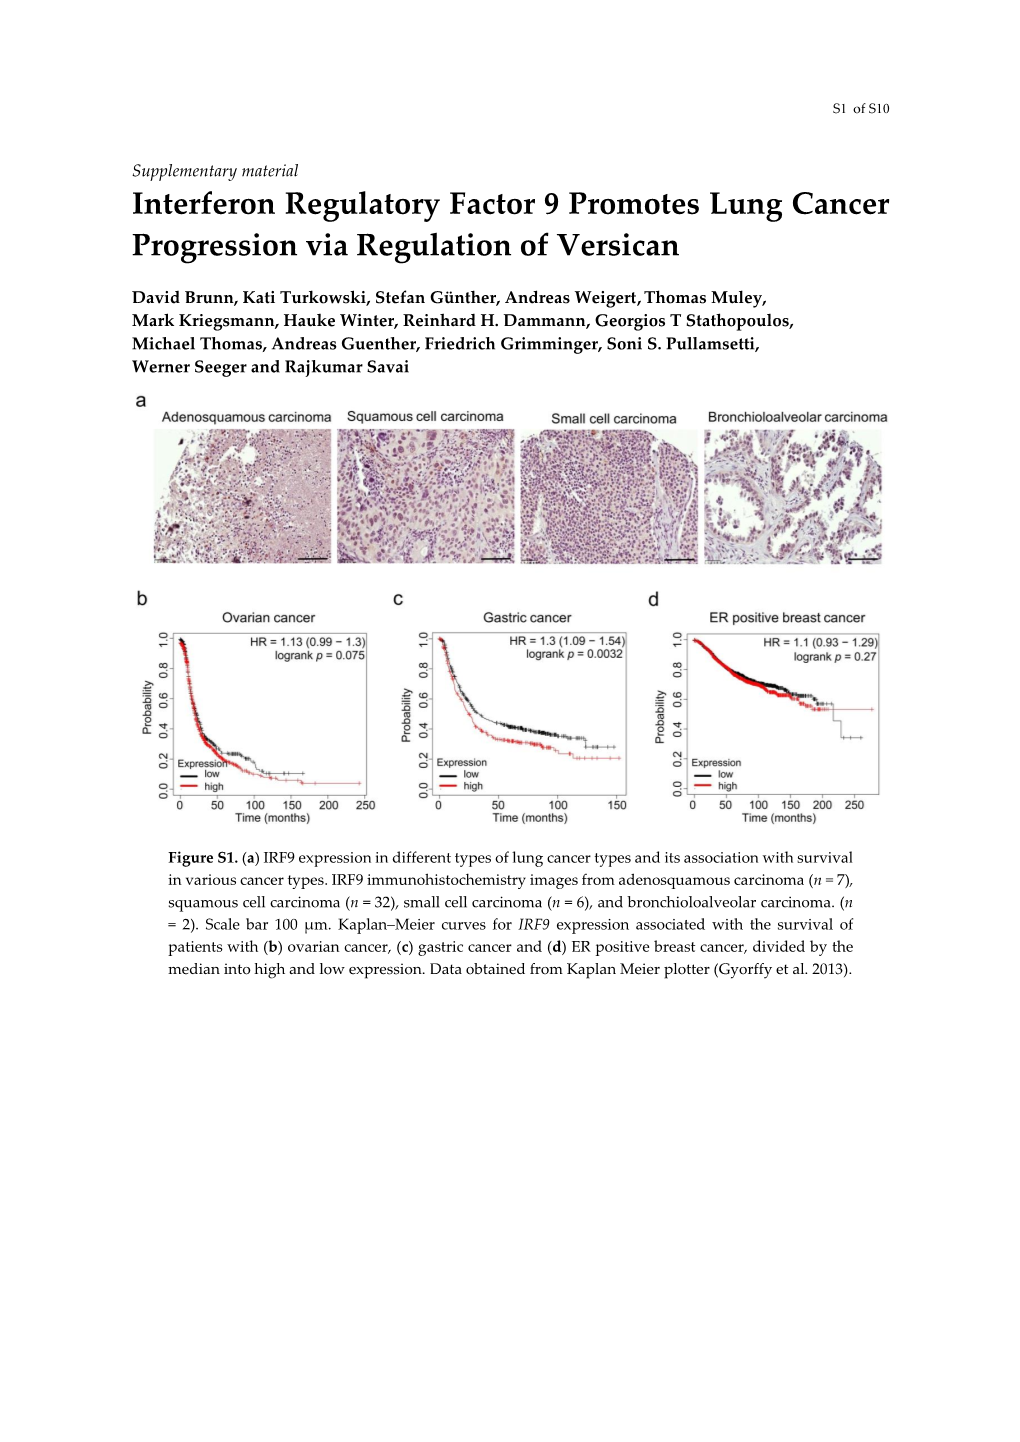 Interferon Regulatory Factor 9 Promotes Lung Cancer Progression Via Regulation of Versican